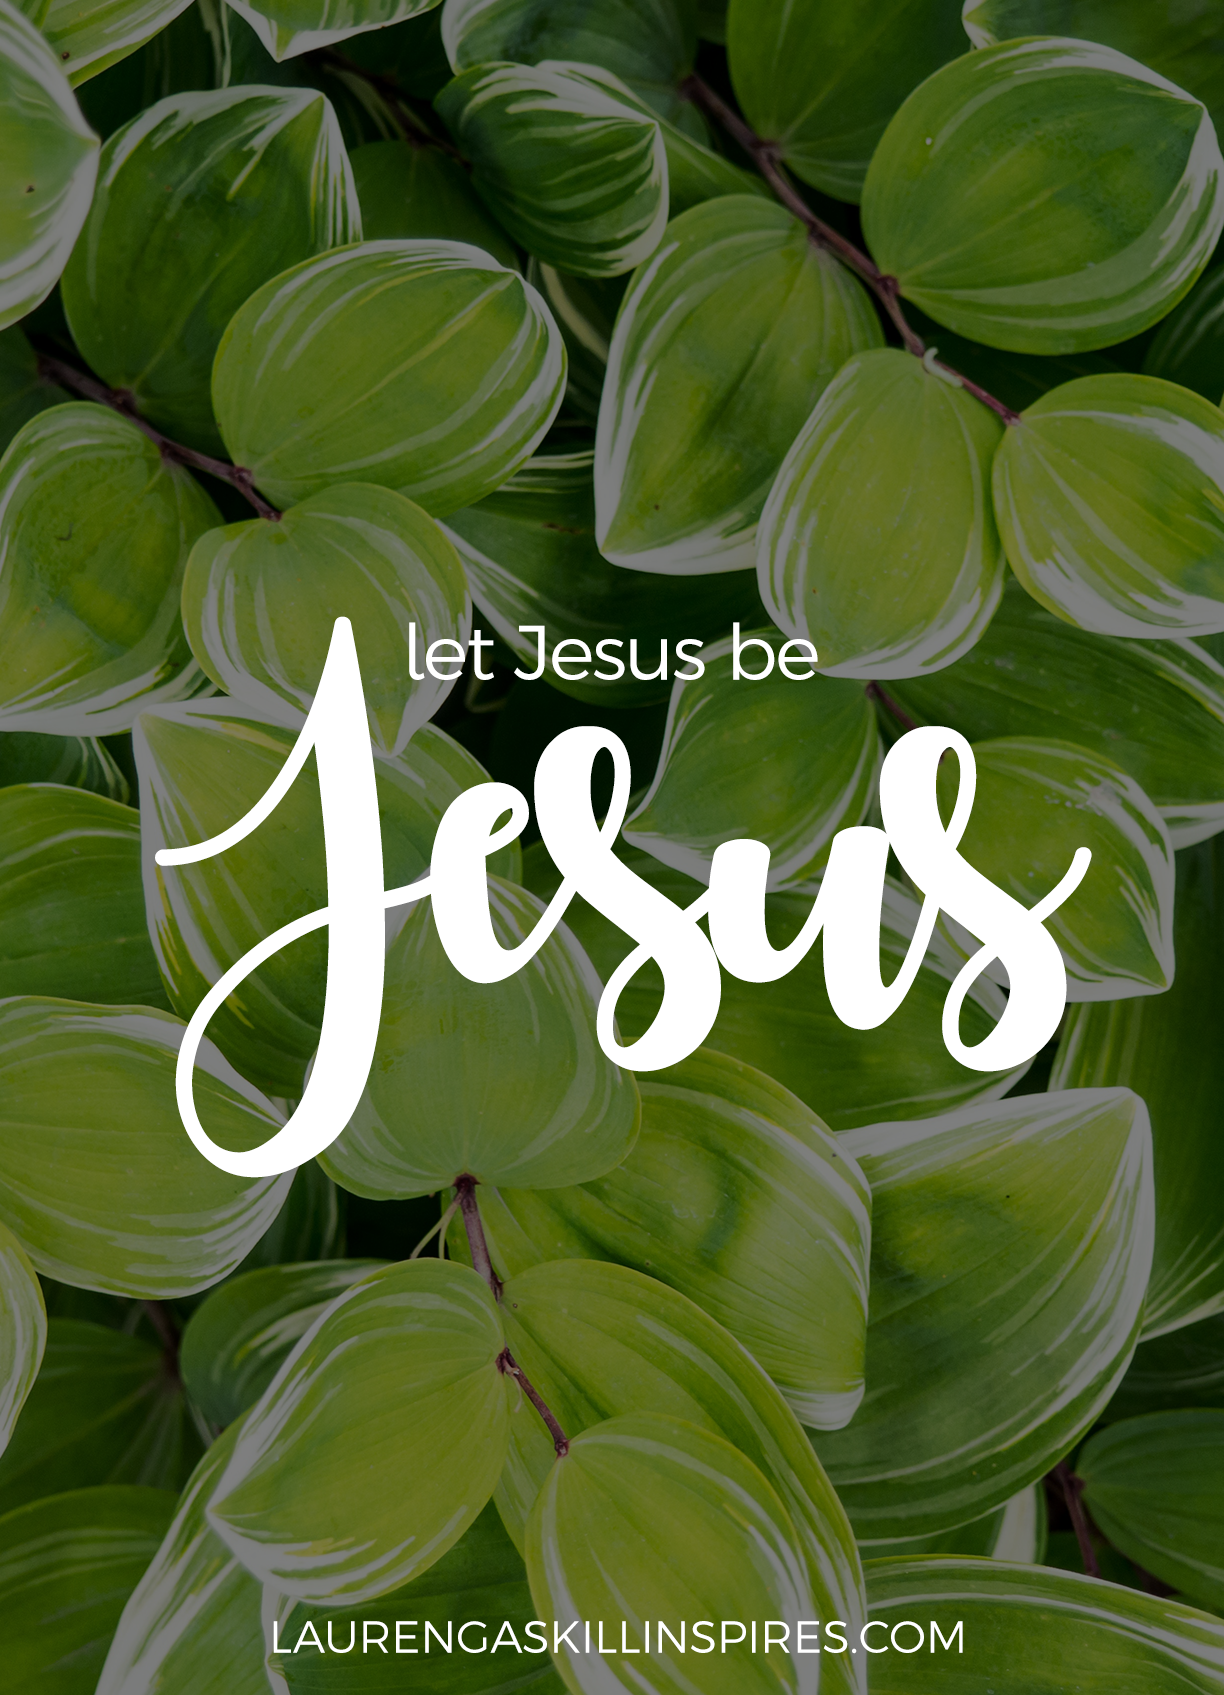 Let Jesus be Jesus.